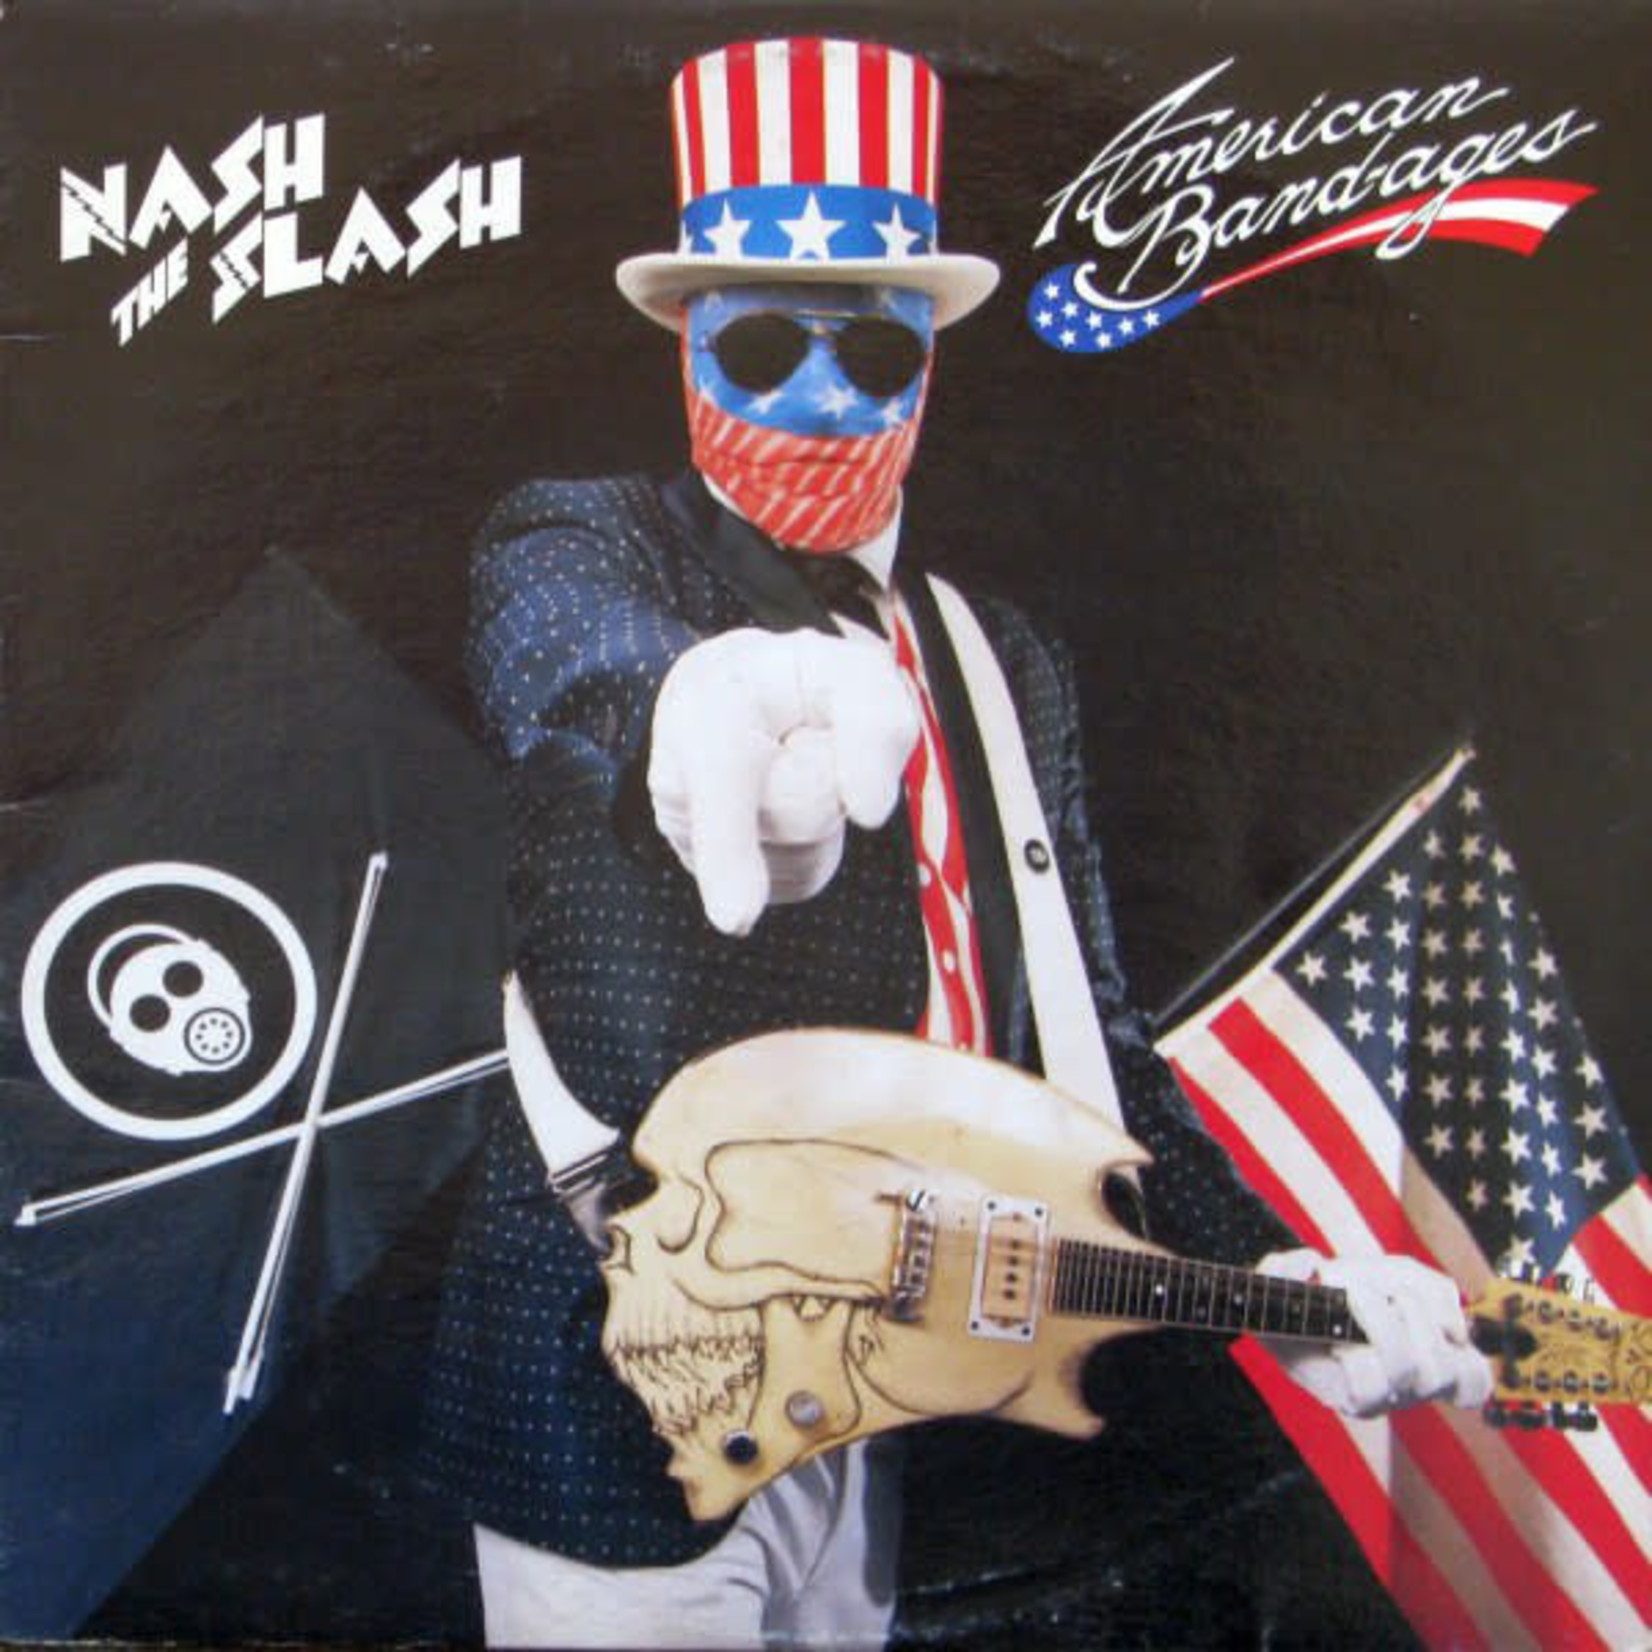 Nash the Slash Nash The Slash – American Band-ages (VG+, 1984, LP, Quality – SV 2132, Canada)